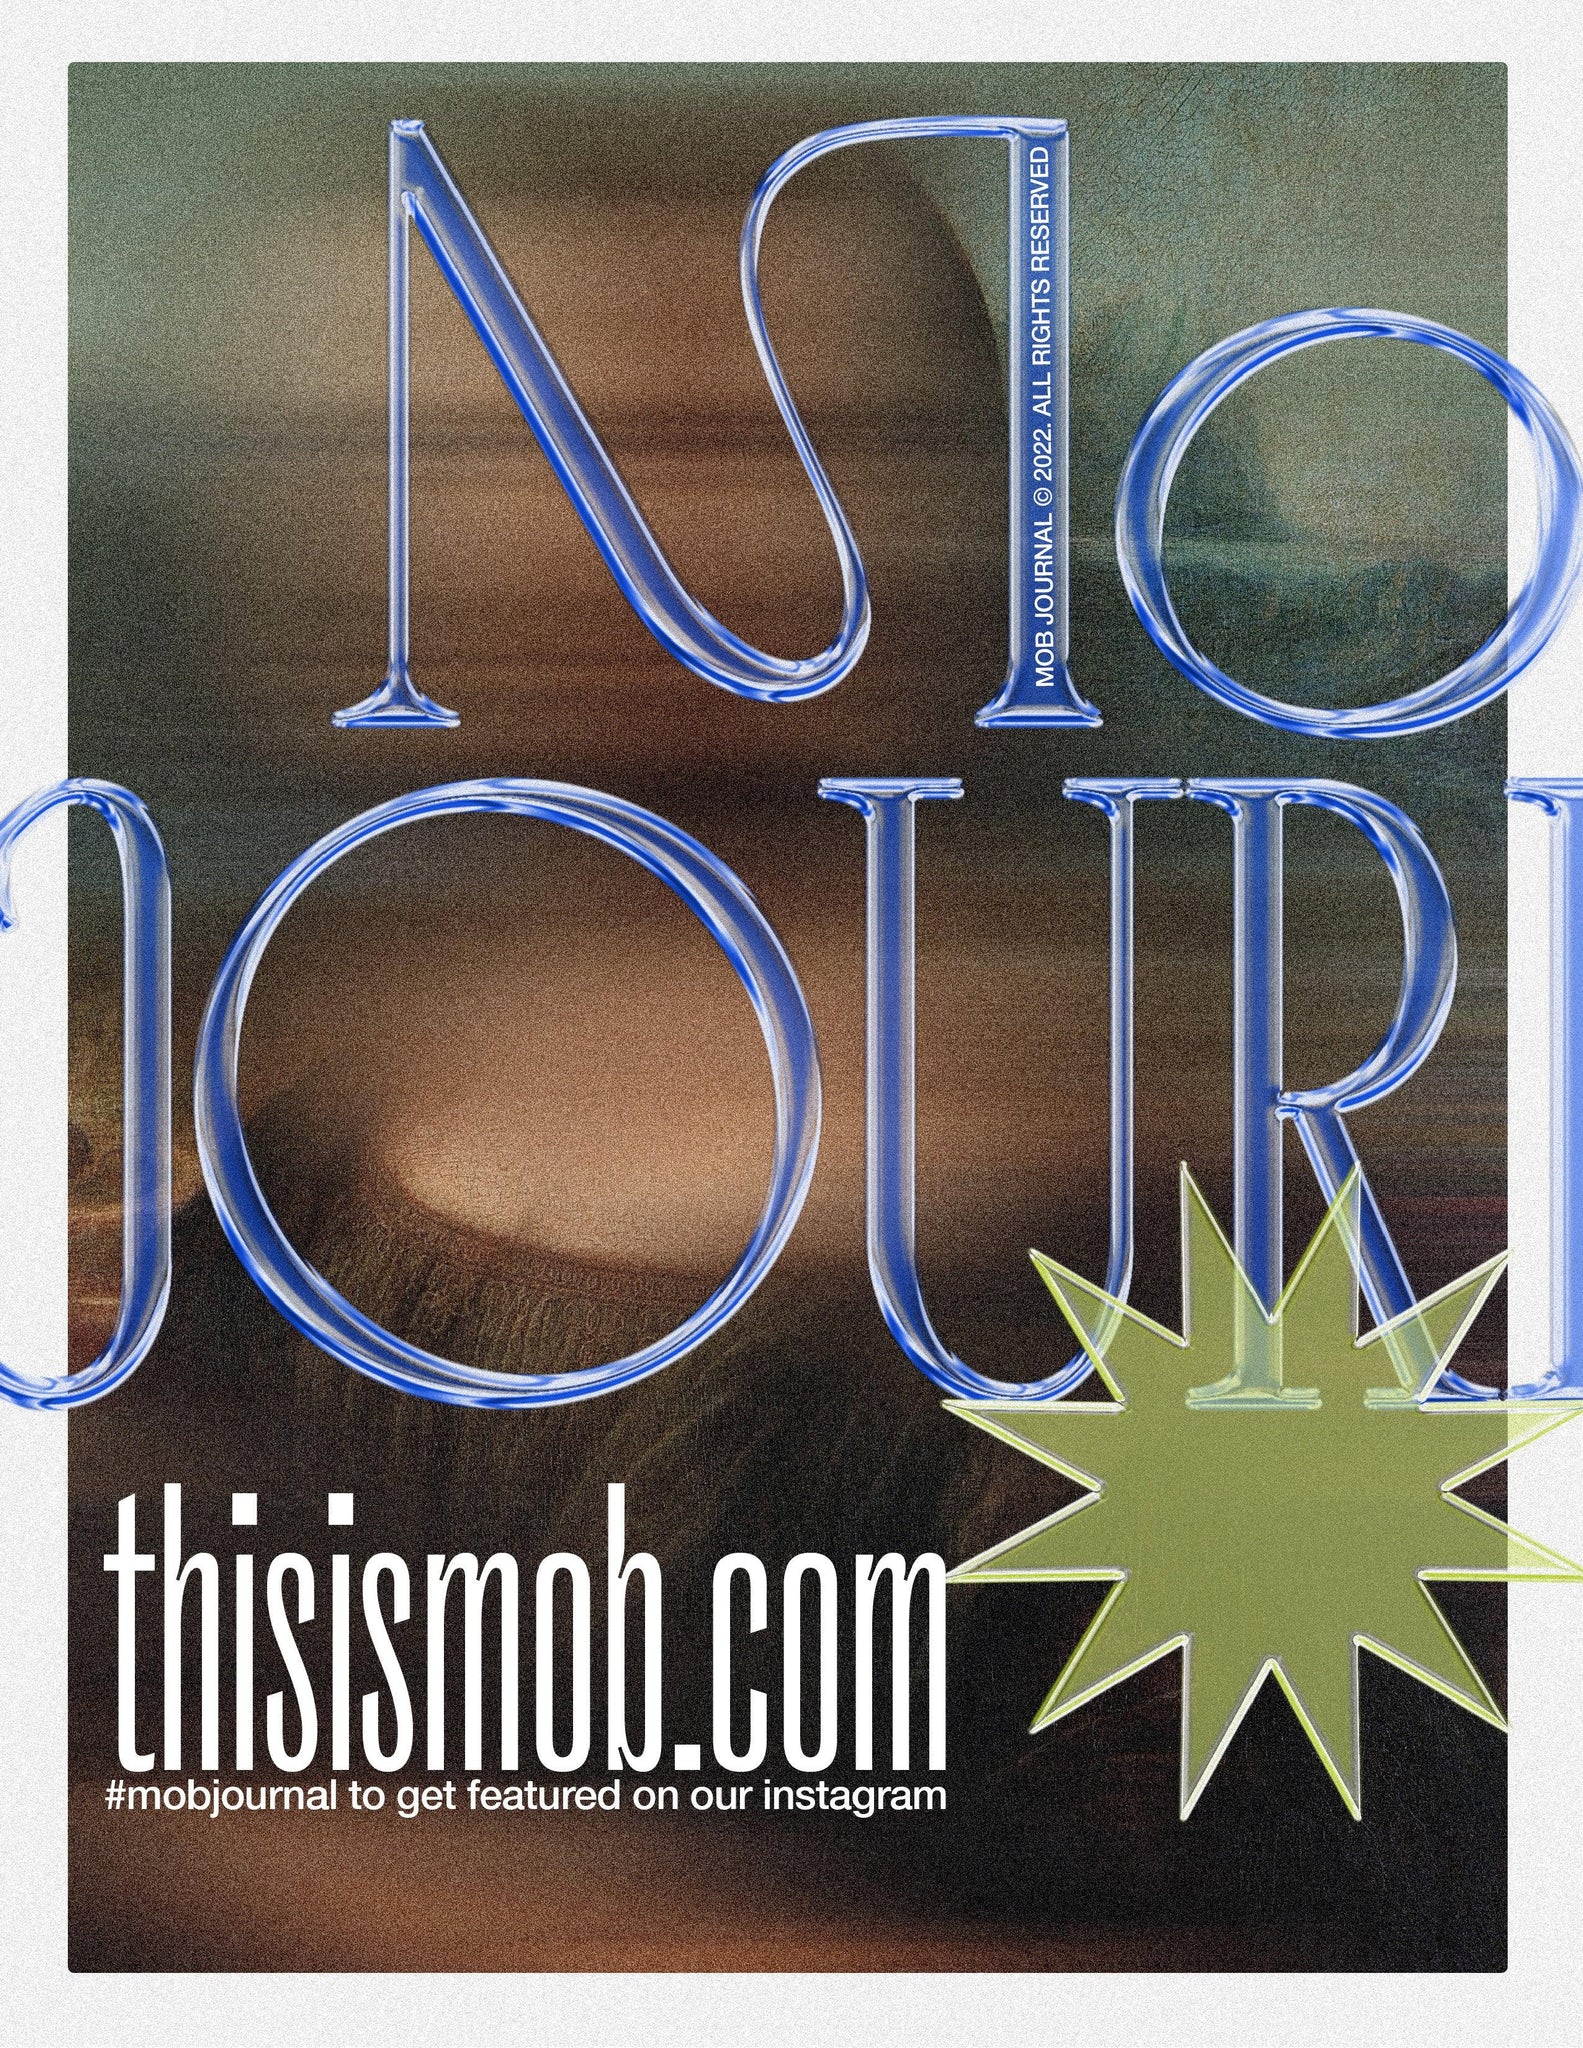 MOB JOURNAL | VOLUME TWENTY SIX | ISSUE #39 - Mob Journal